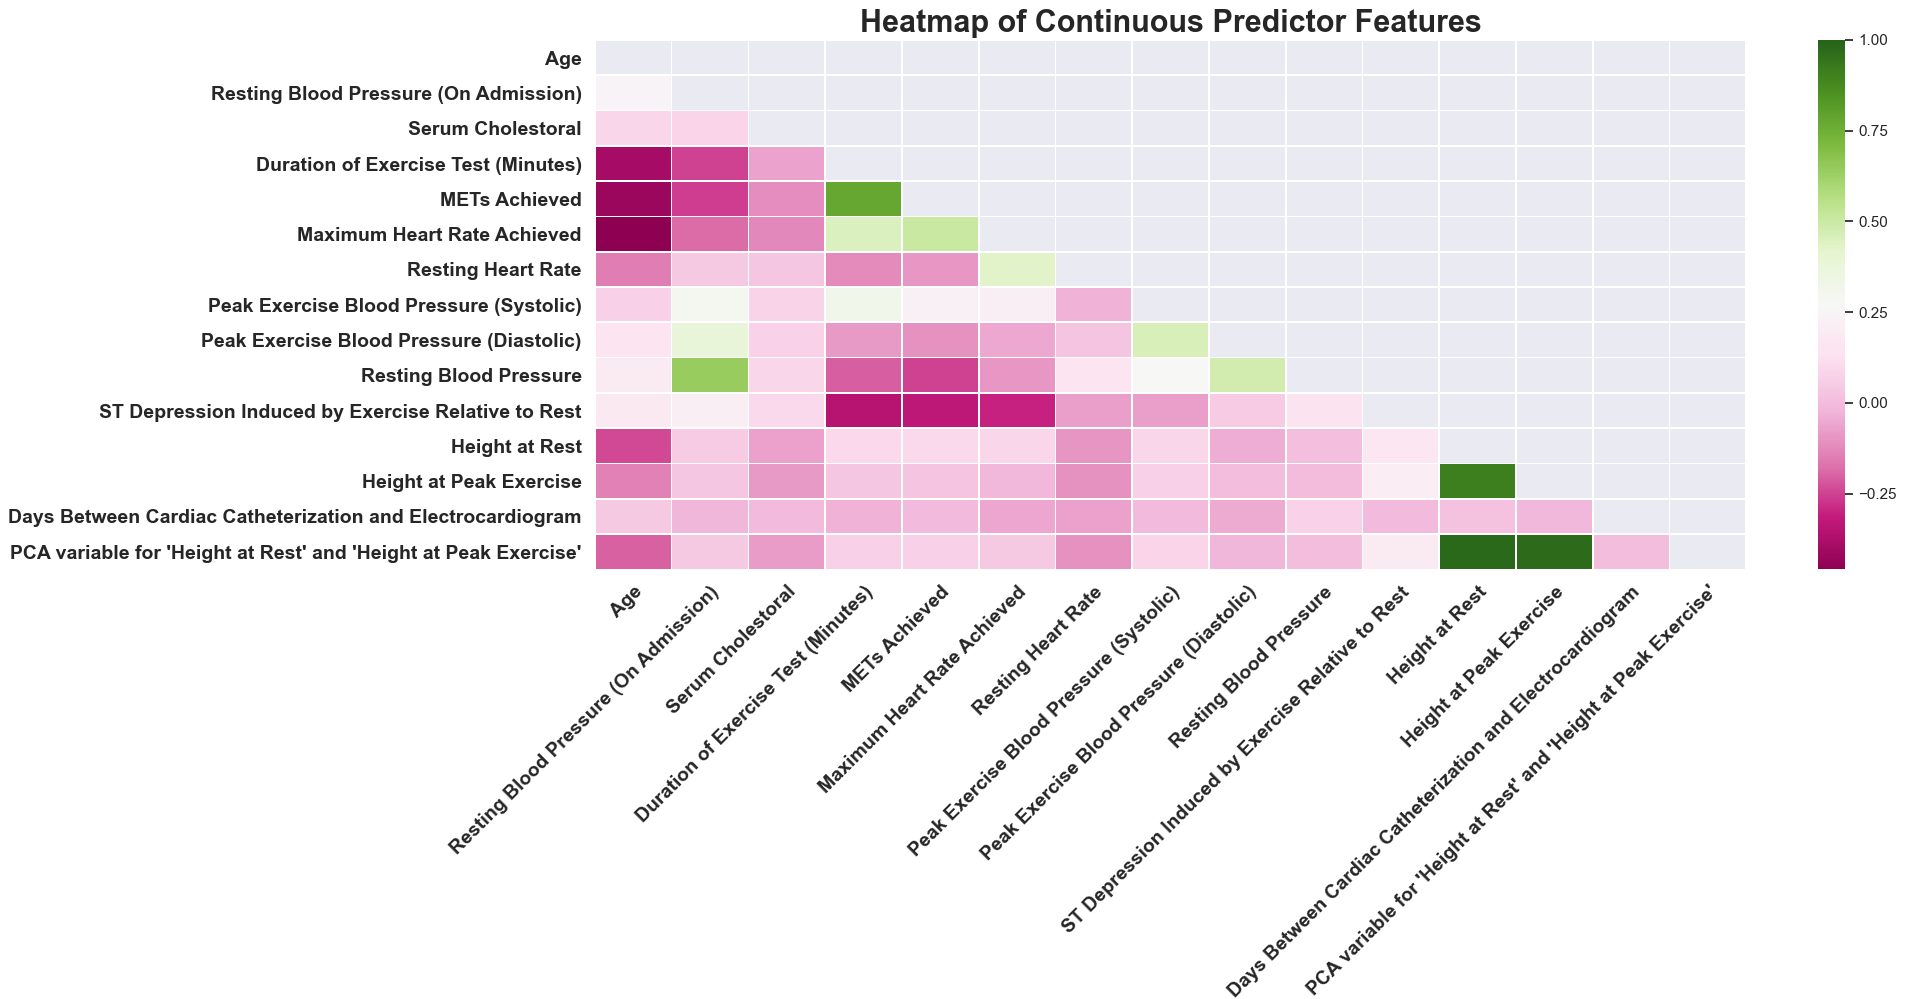 Heatmap of Continous Predictor Variables